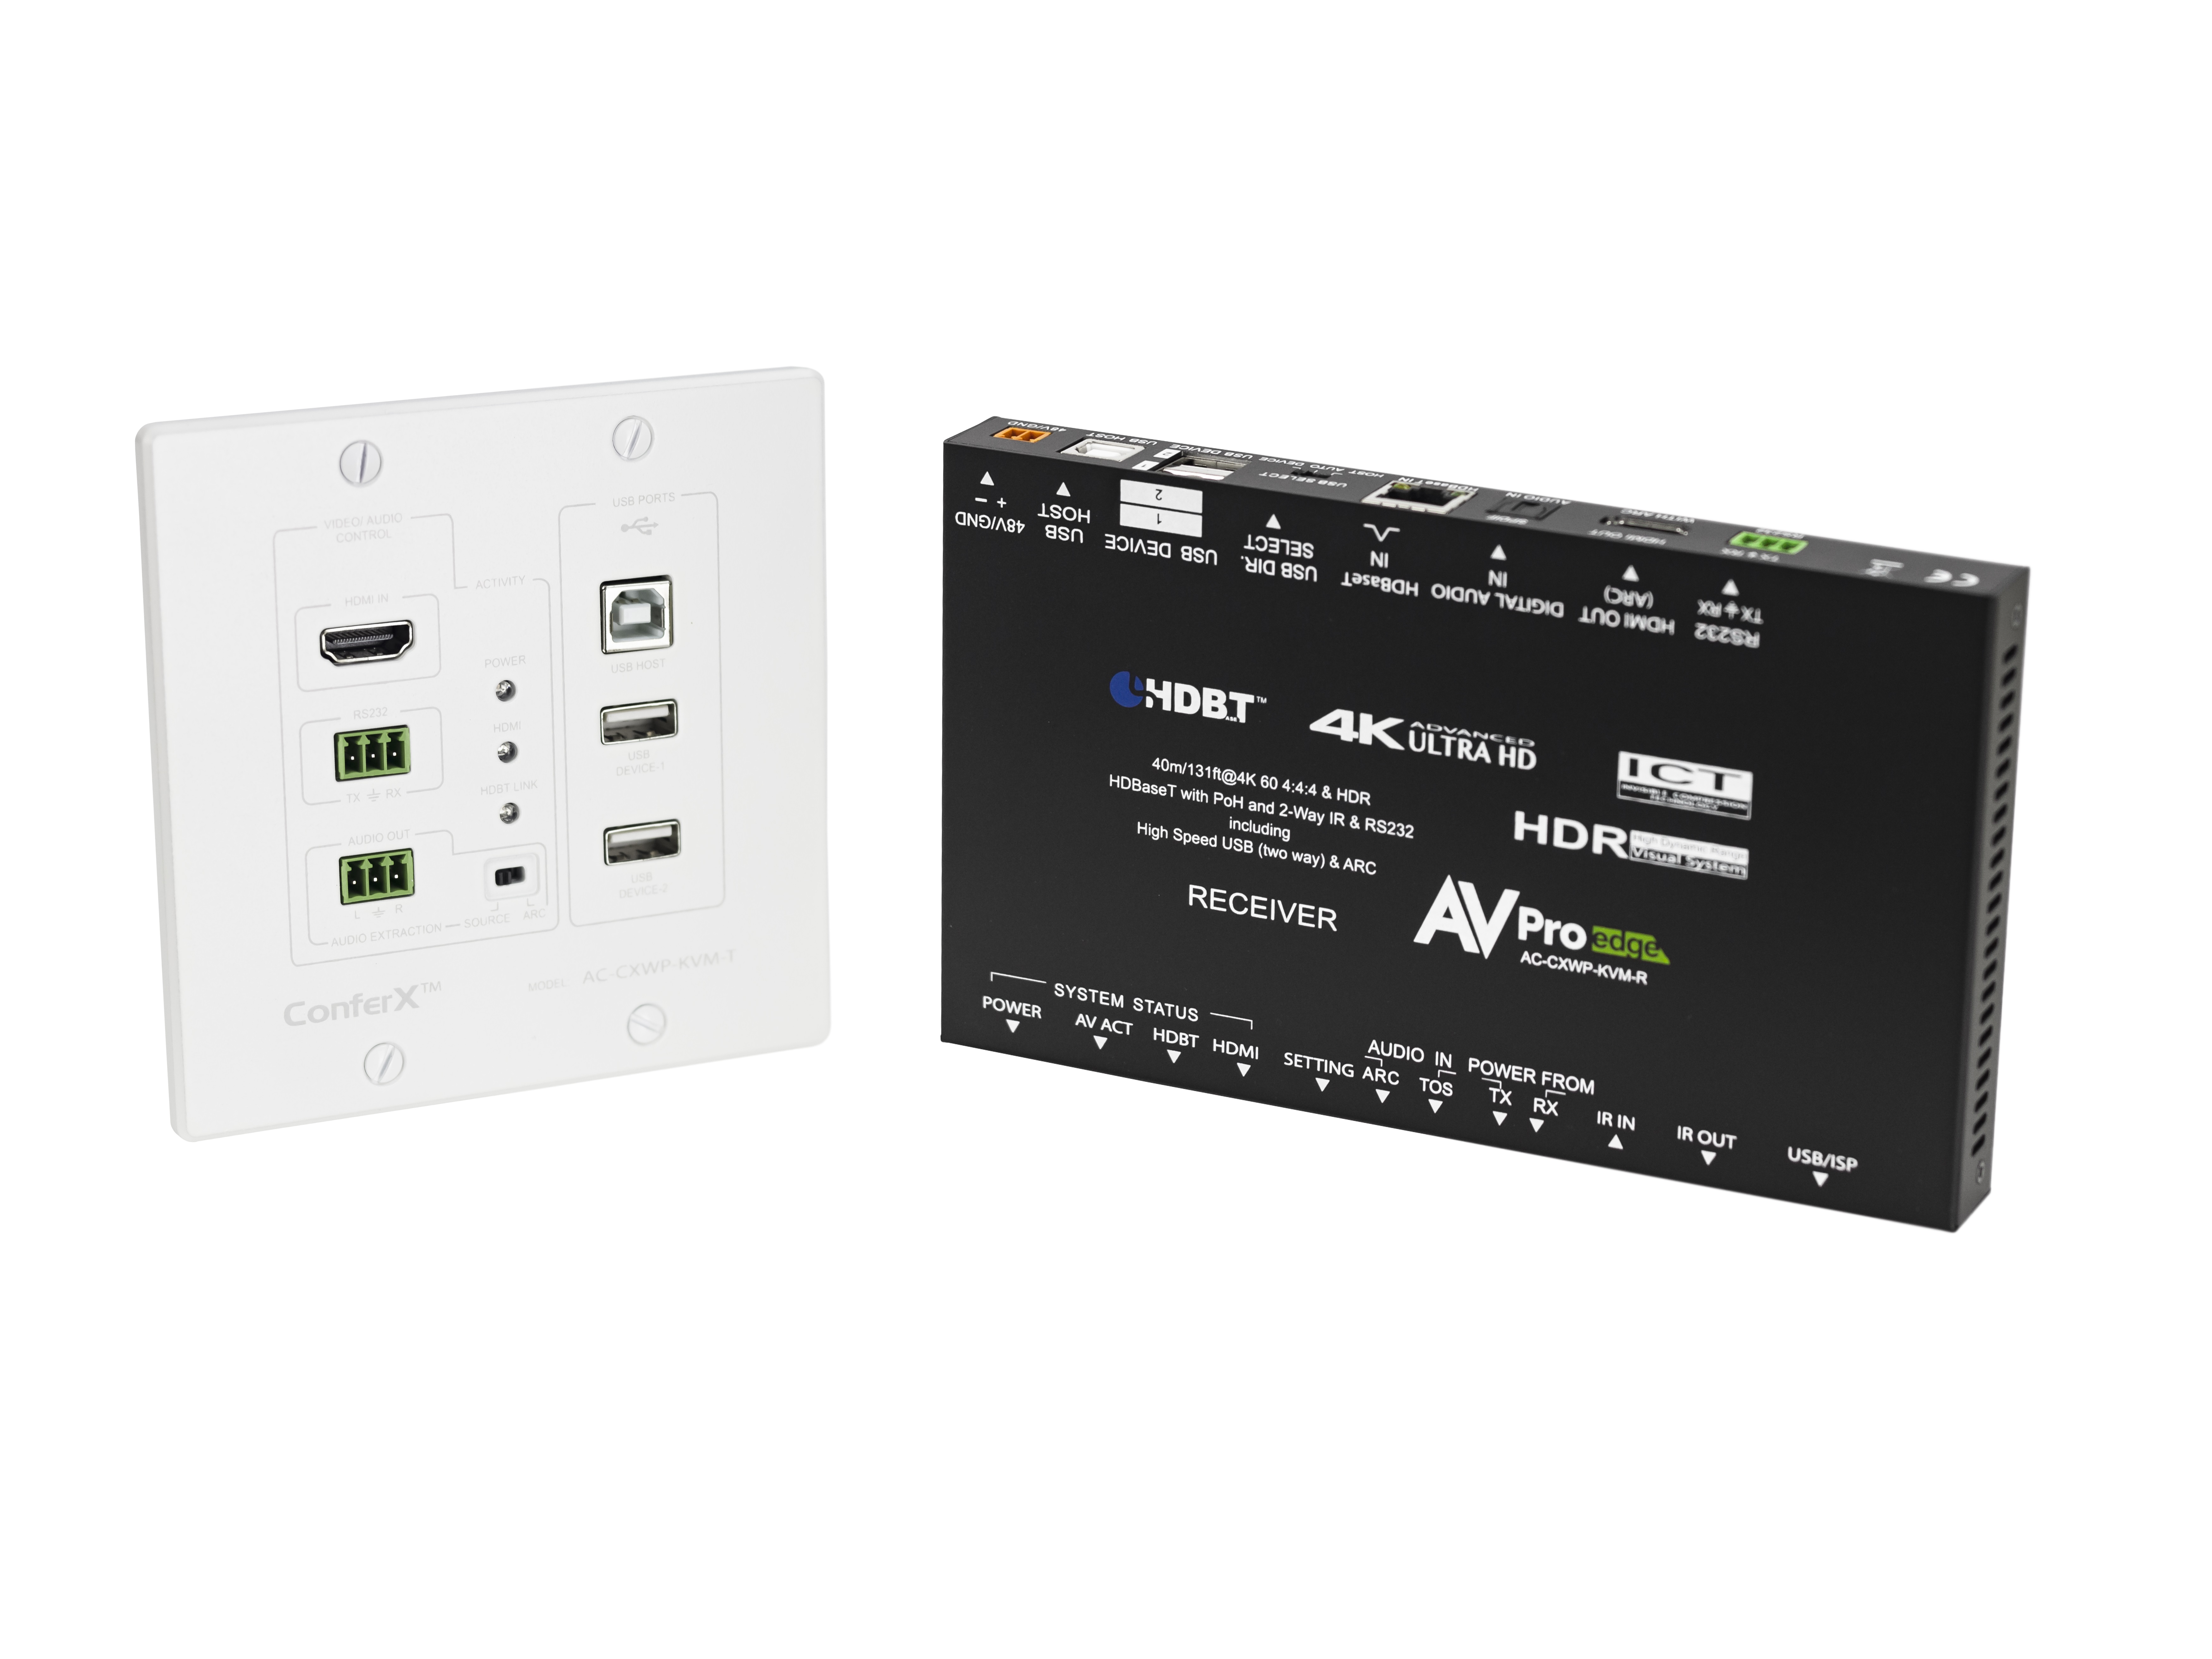 AC-CXWP-KVM-KIT HDMI and Bi-Directional USB Wall Plate Extender (Transmitter/Receiver) Kit via HDBaseT by AVPro Edge